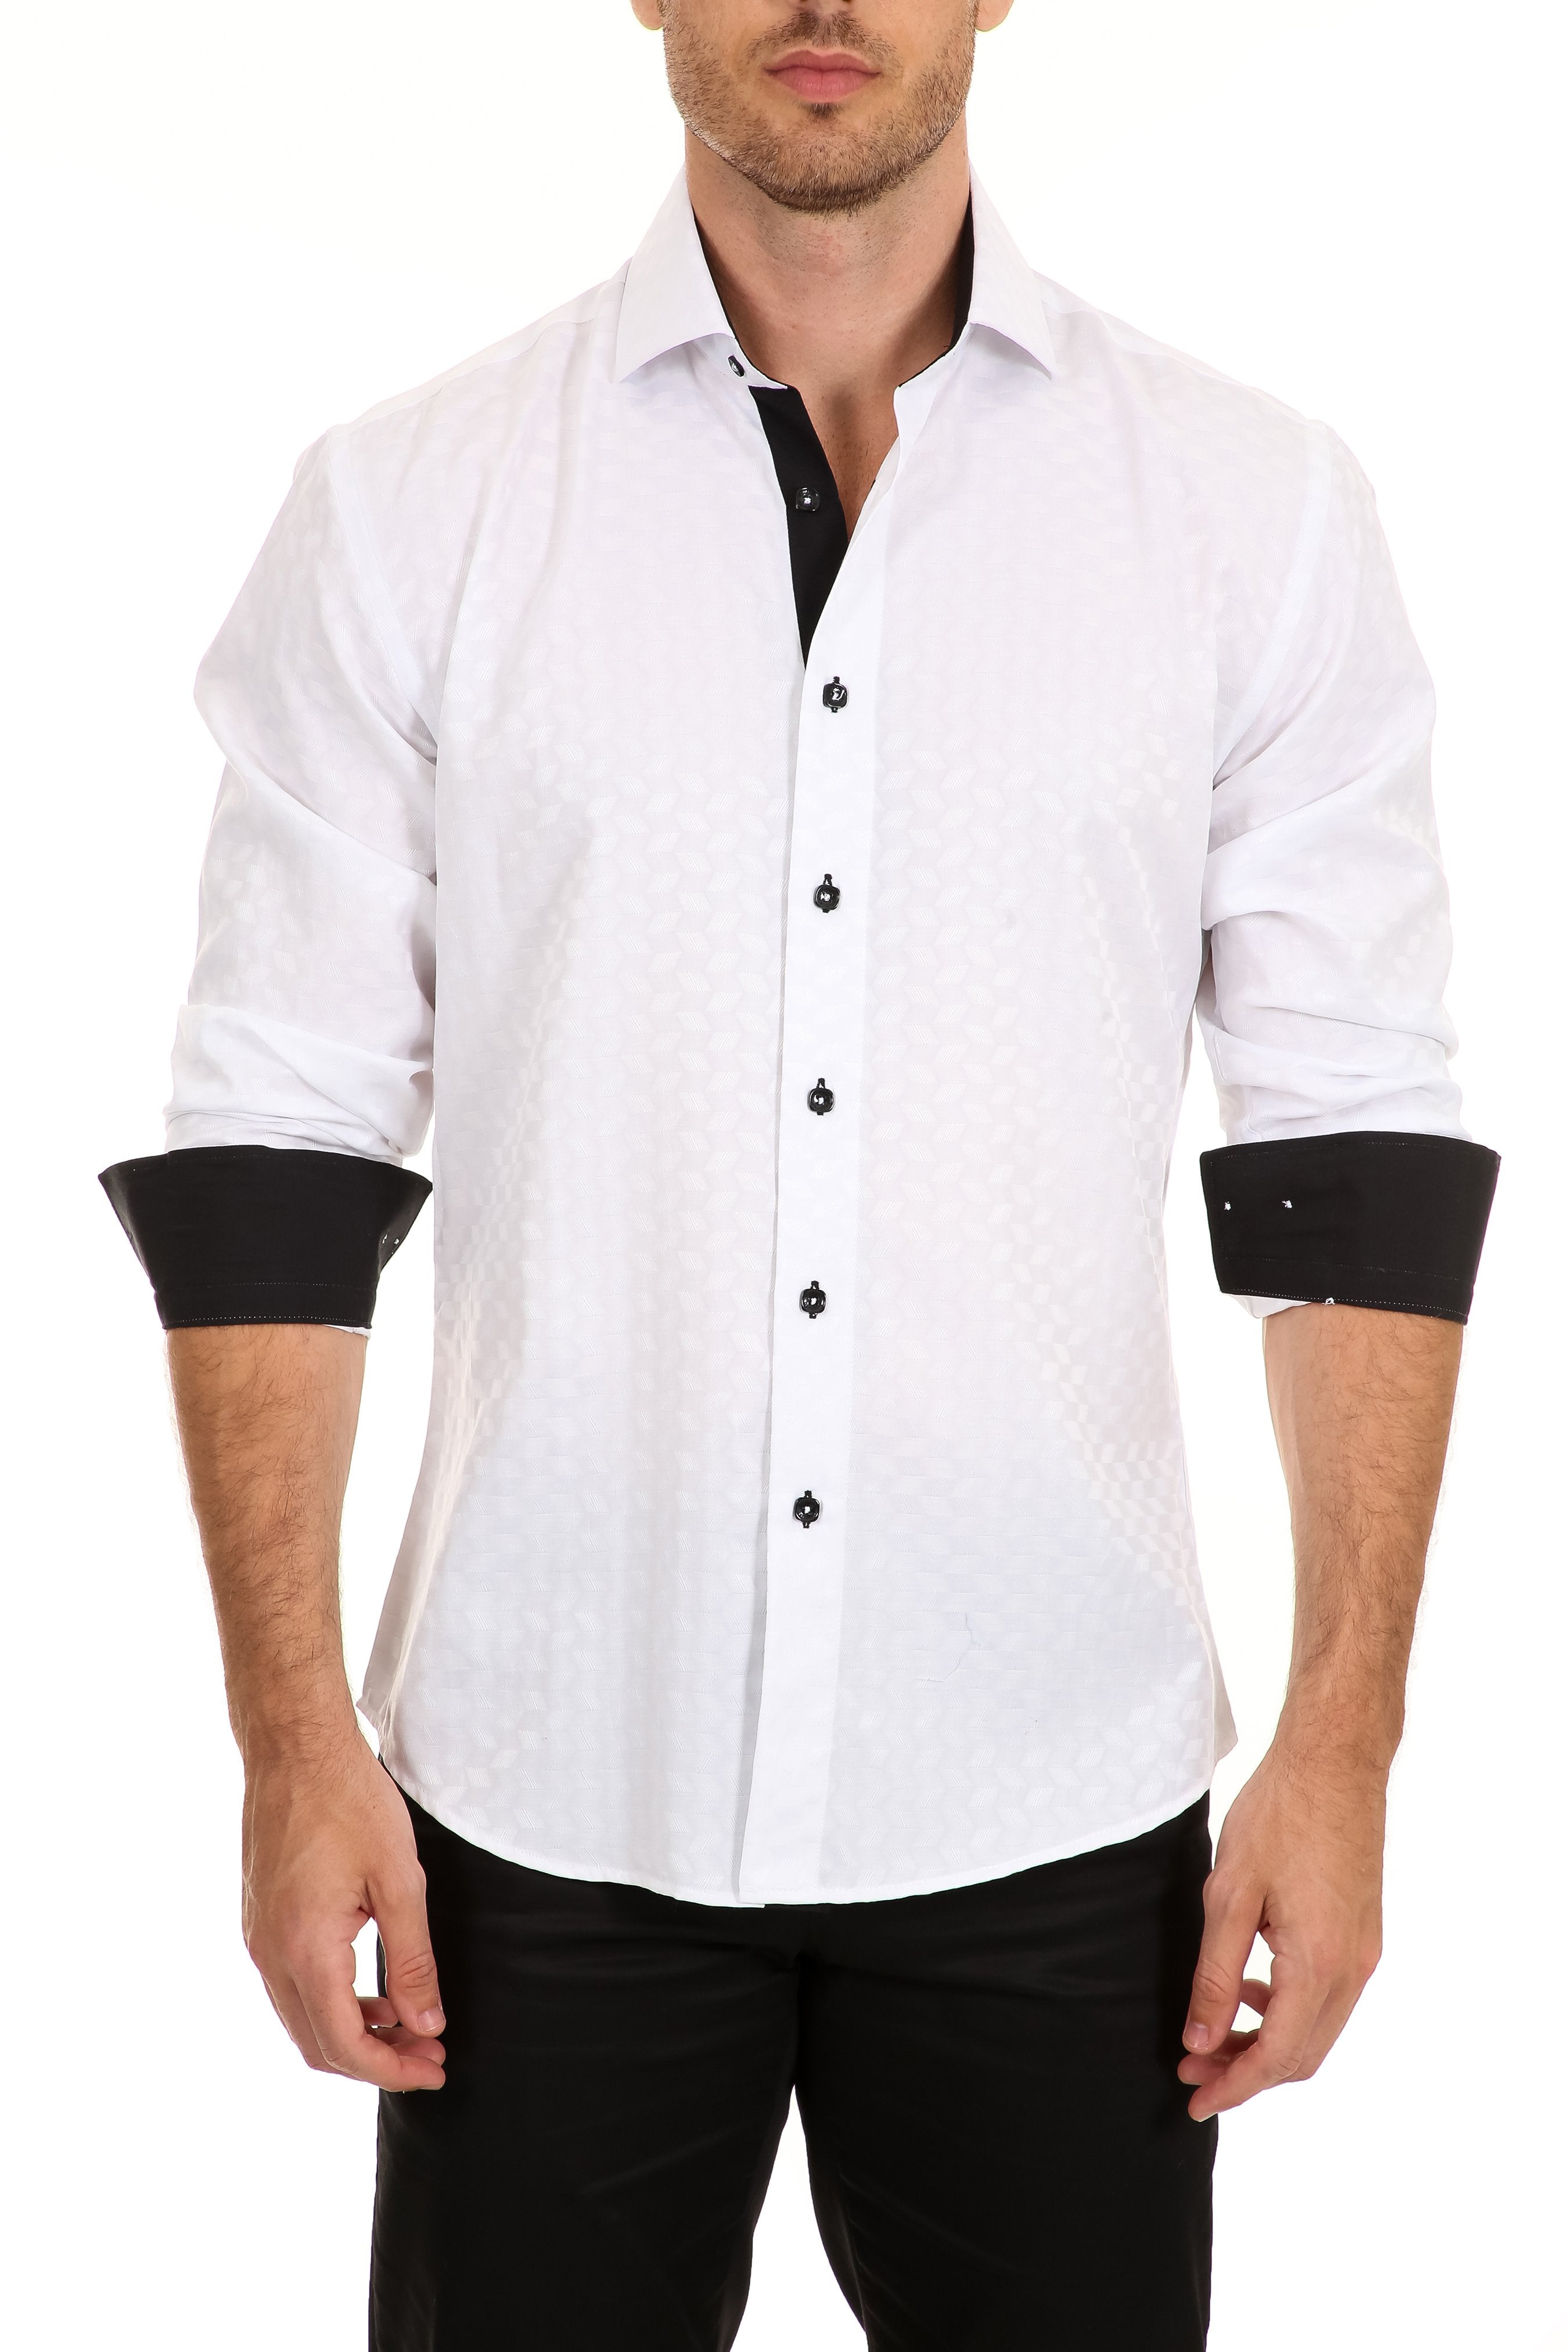 Shirt Dress, Black, White, Long Sleeve Shirt Dress Online